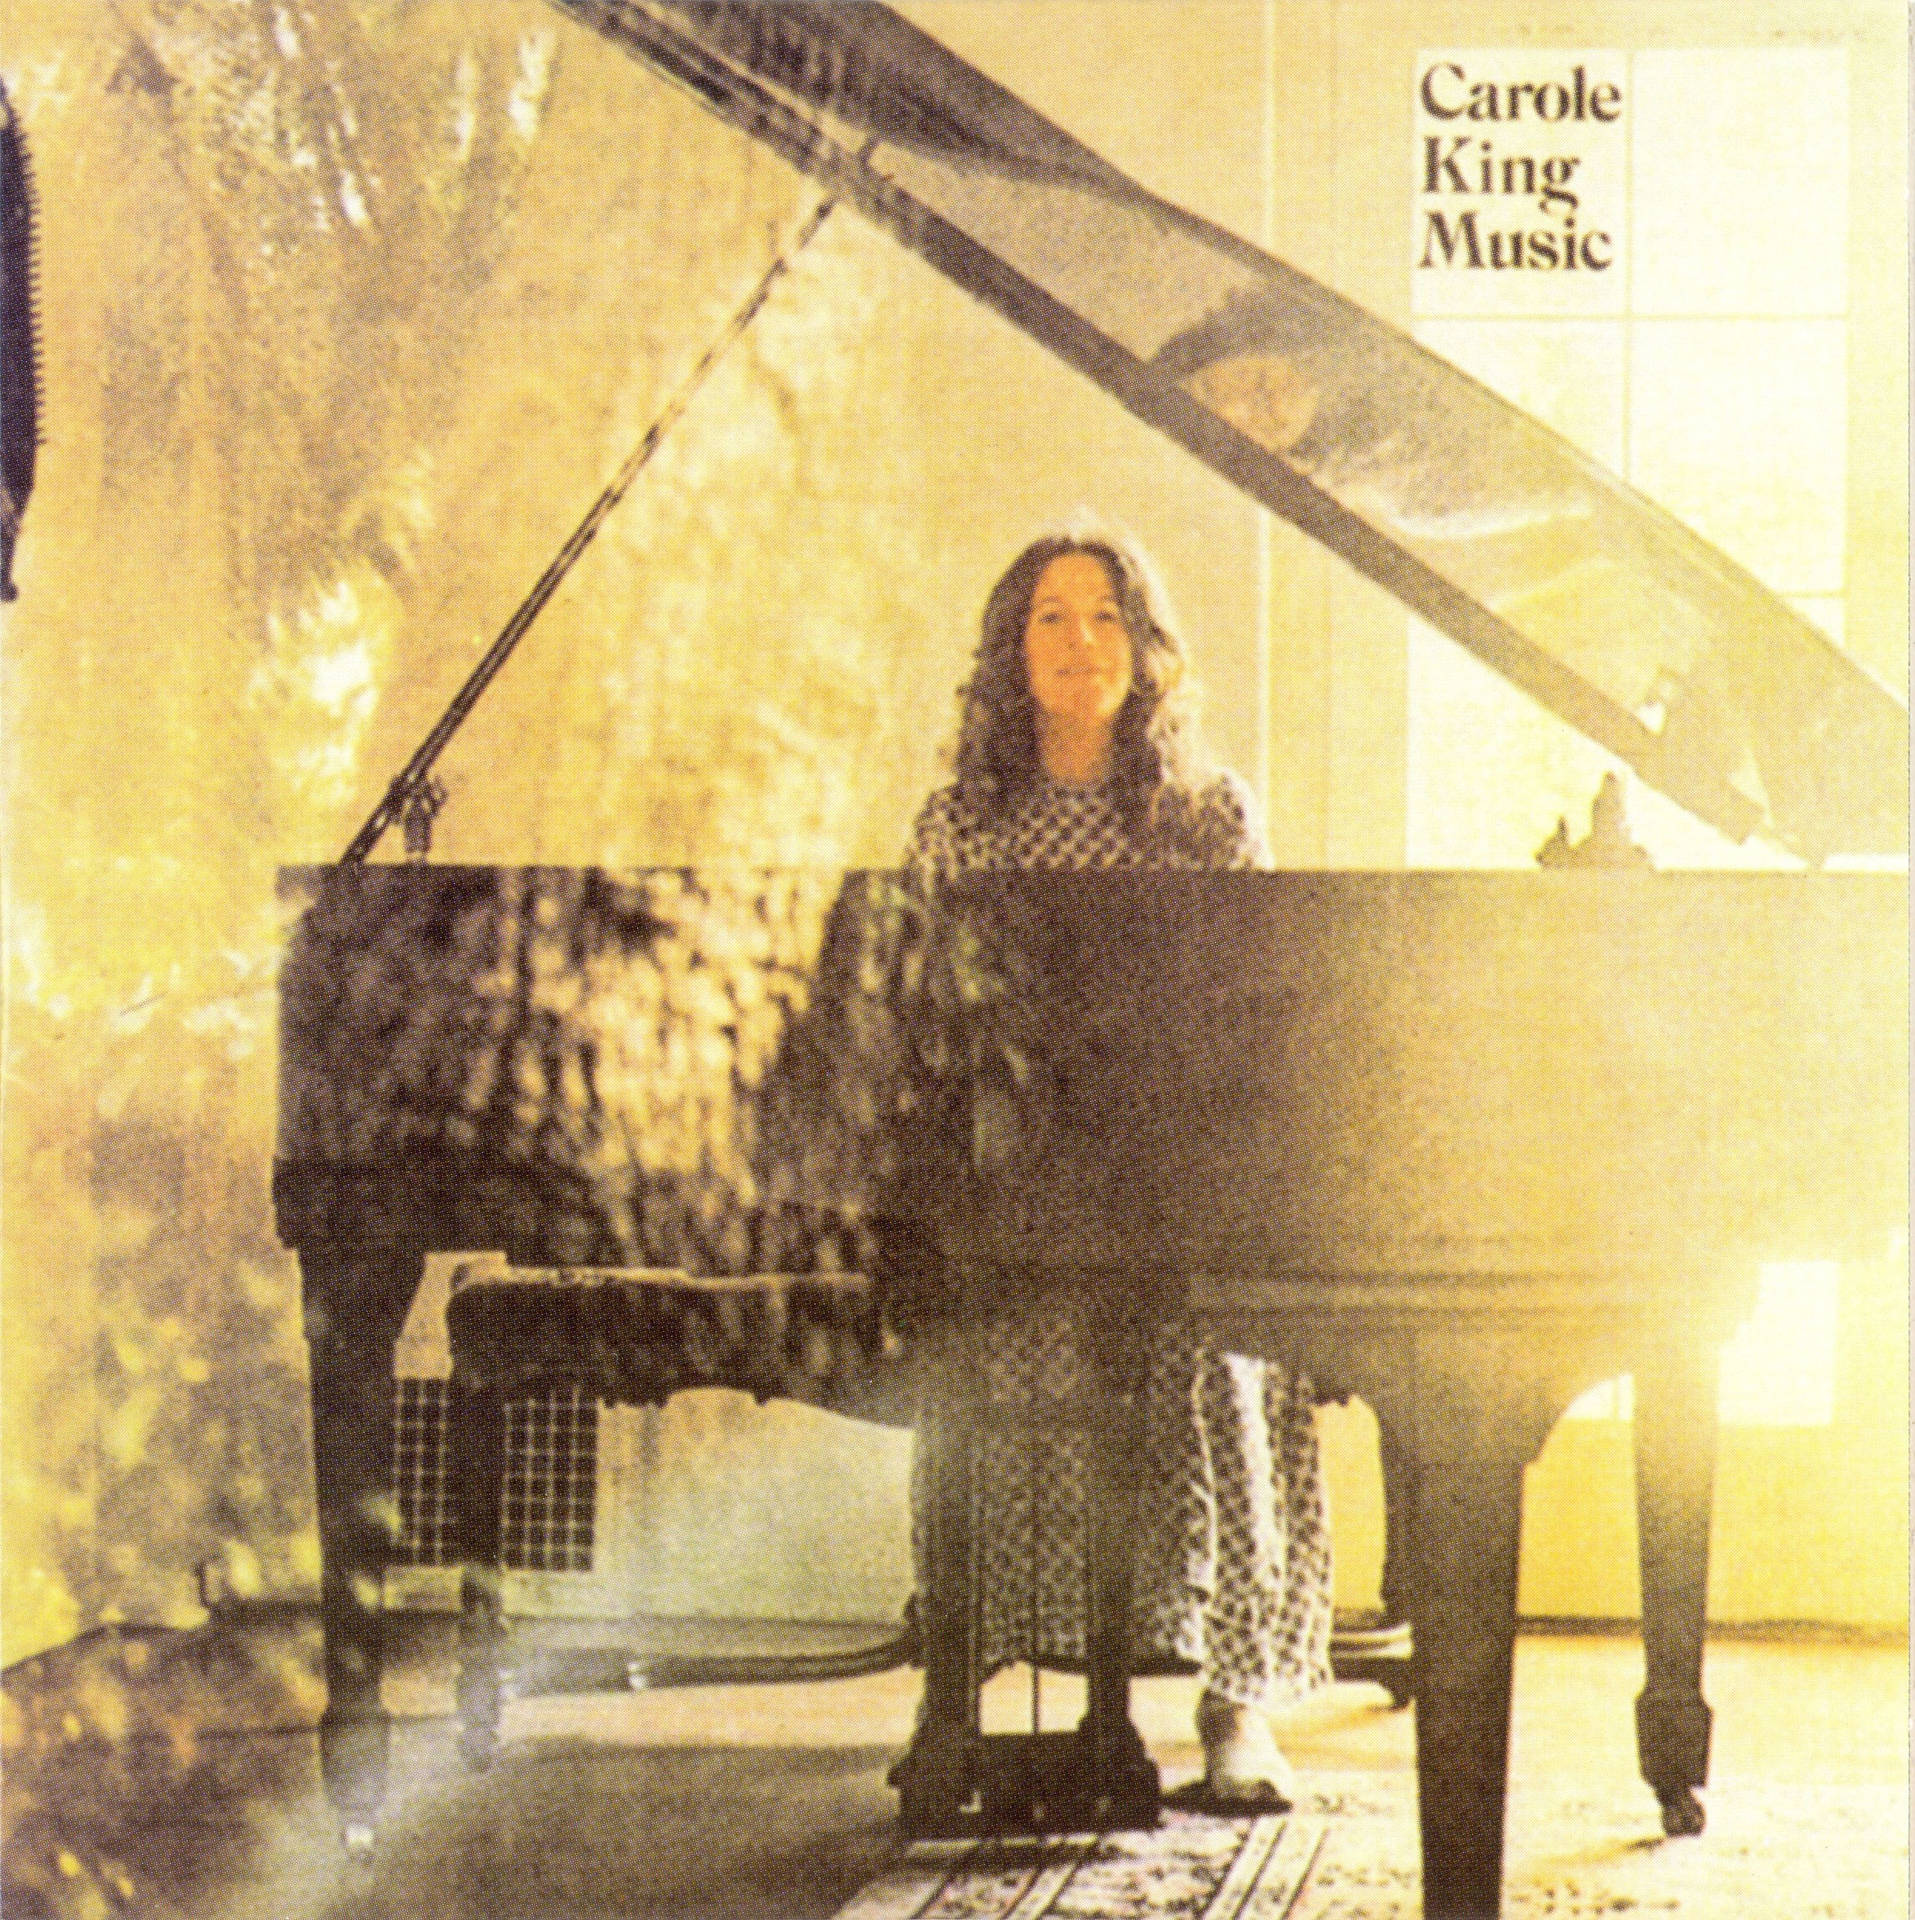 Carole King Music Poster Wallpaper